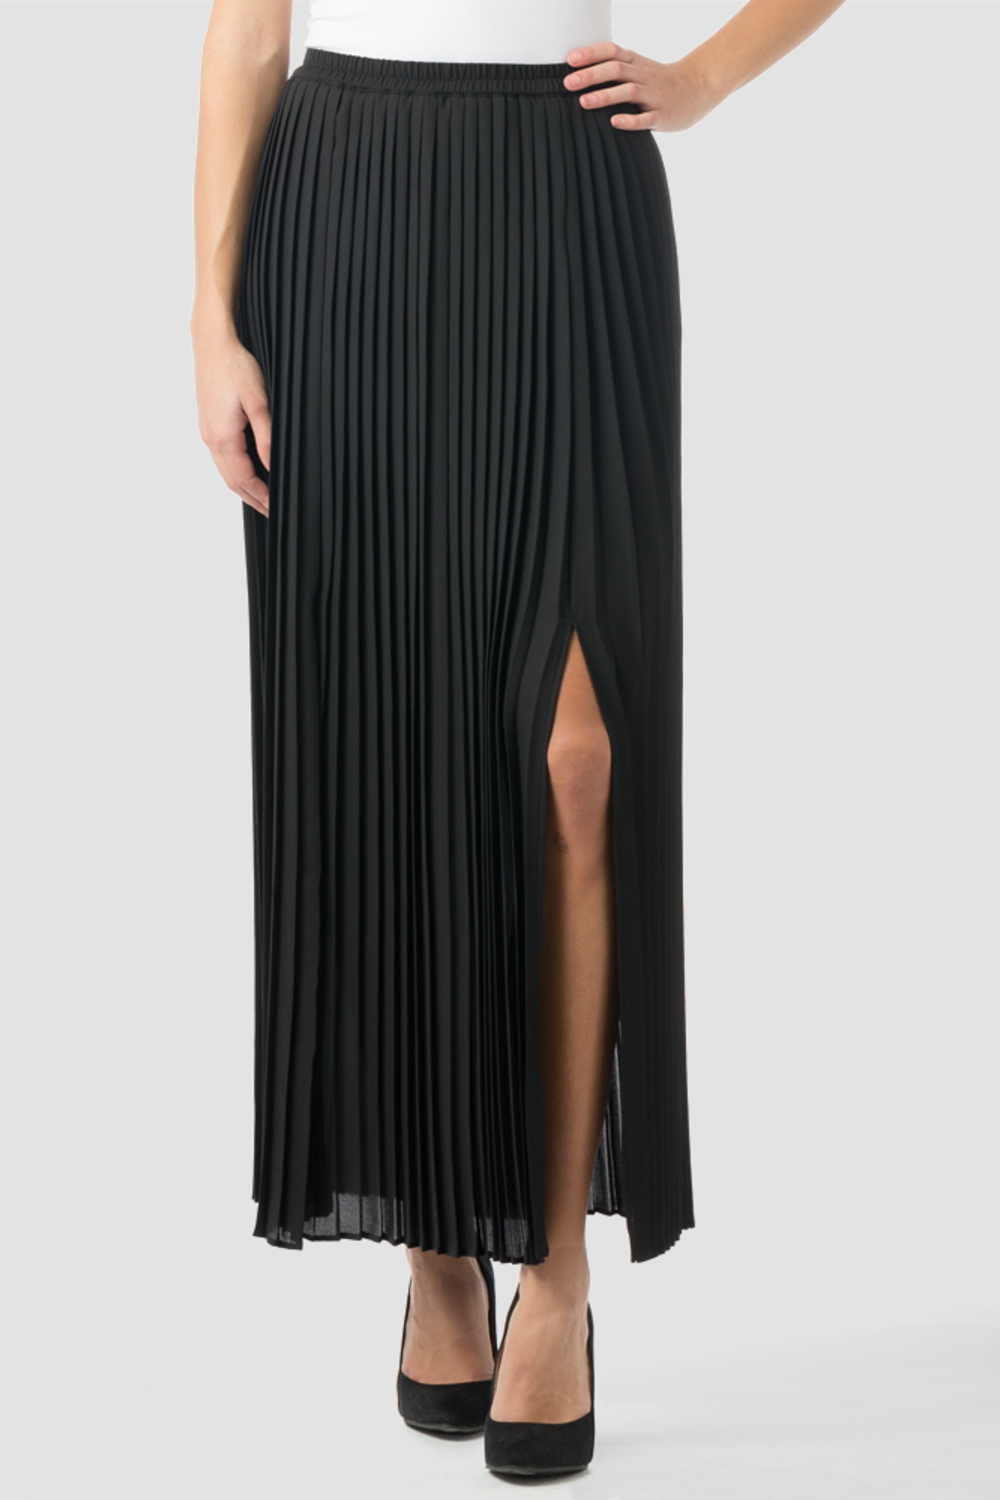 Joseph Ribkoff skirt style 161286. Black